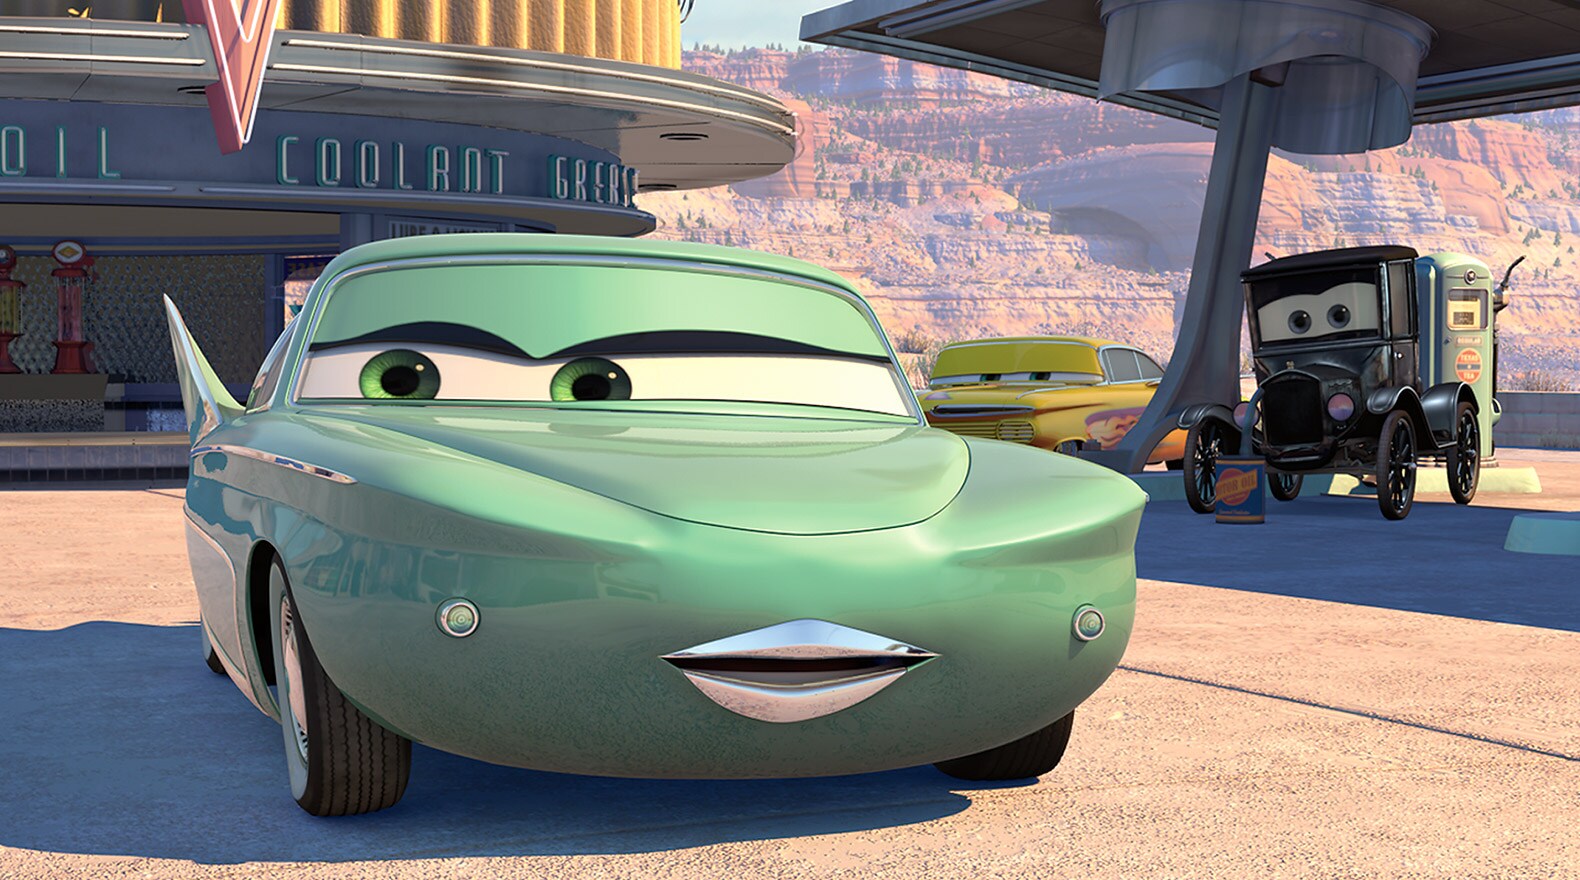 Sally Carrera Characters Disney Cars